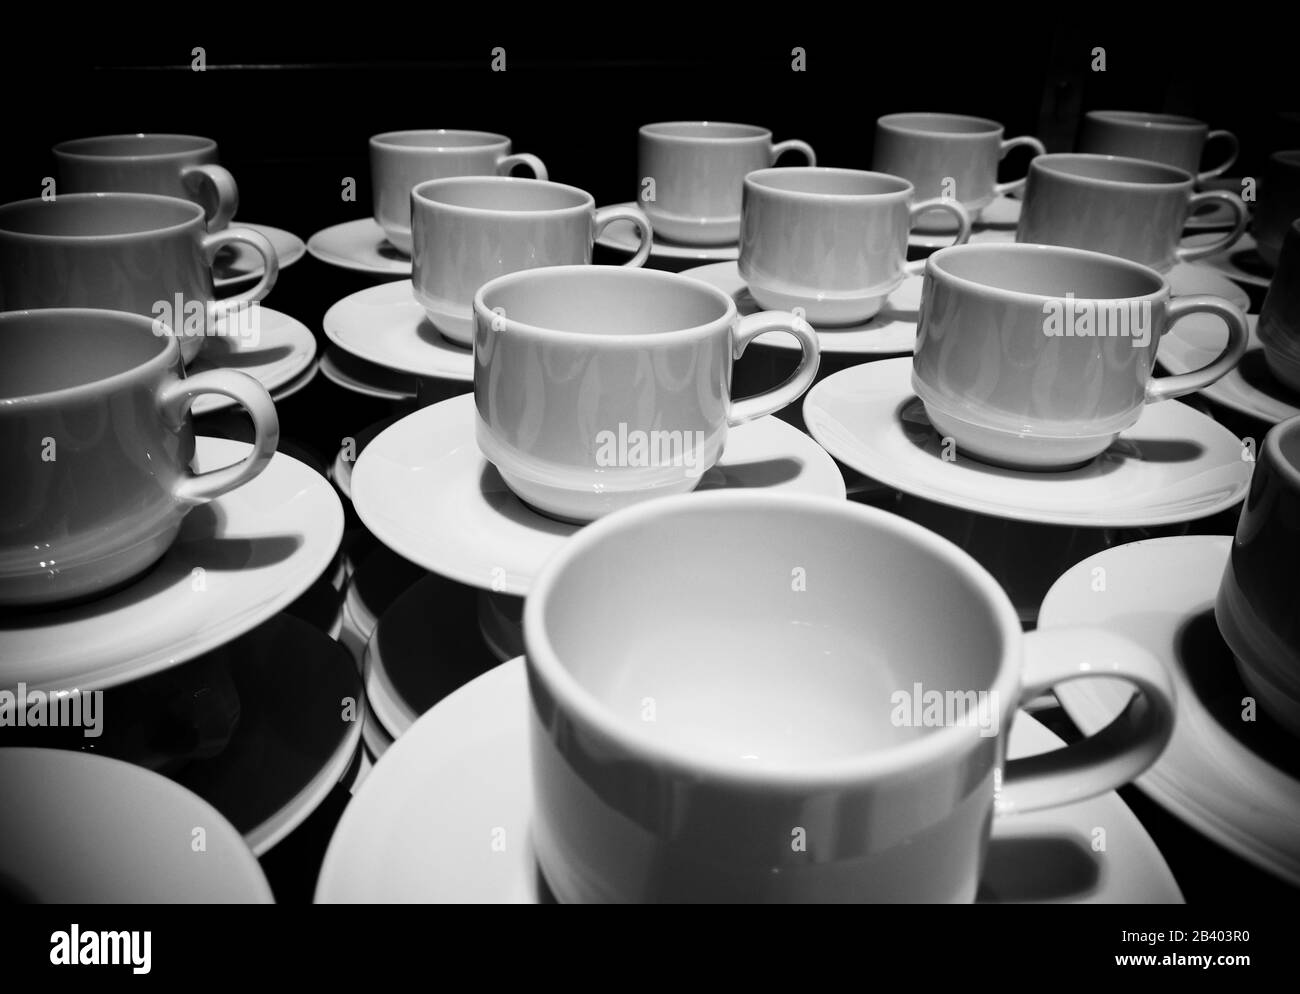 Tazze da caffè impilate durante una riunione. Foto Stock